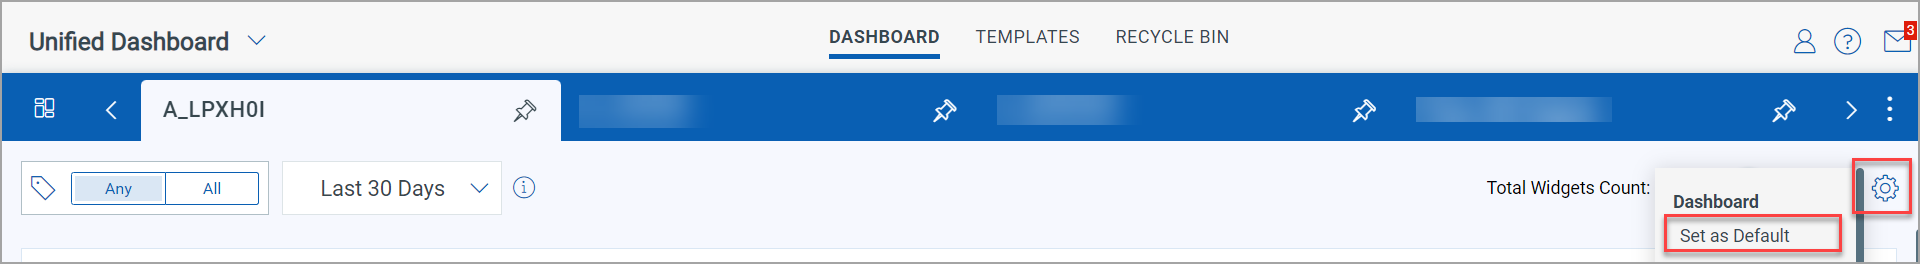 Set as Default Dashbboard option from Tools menu